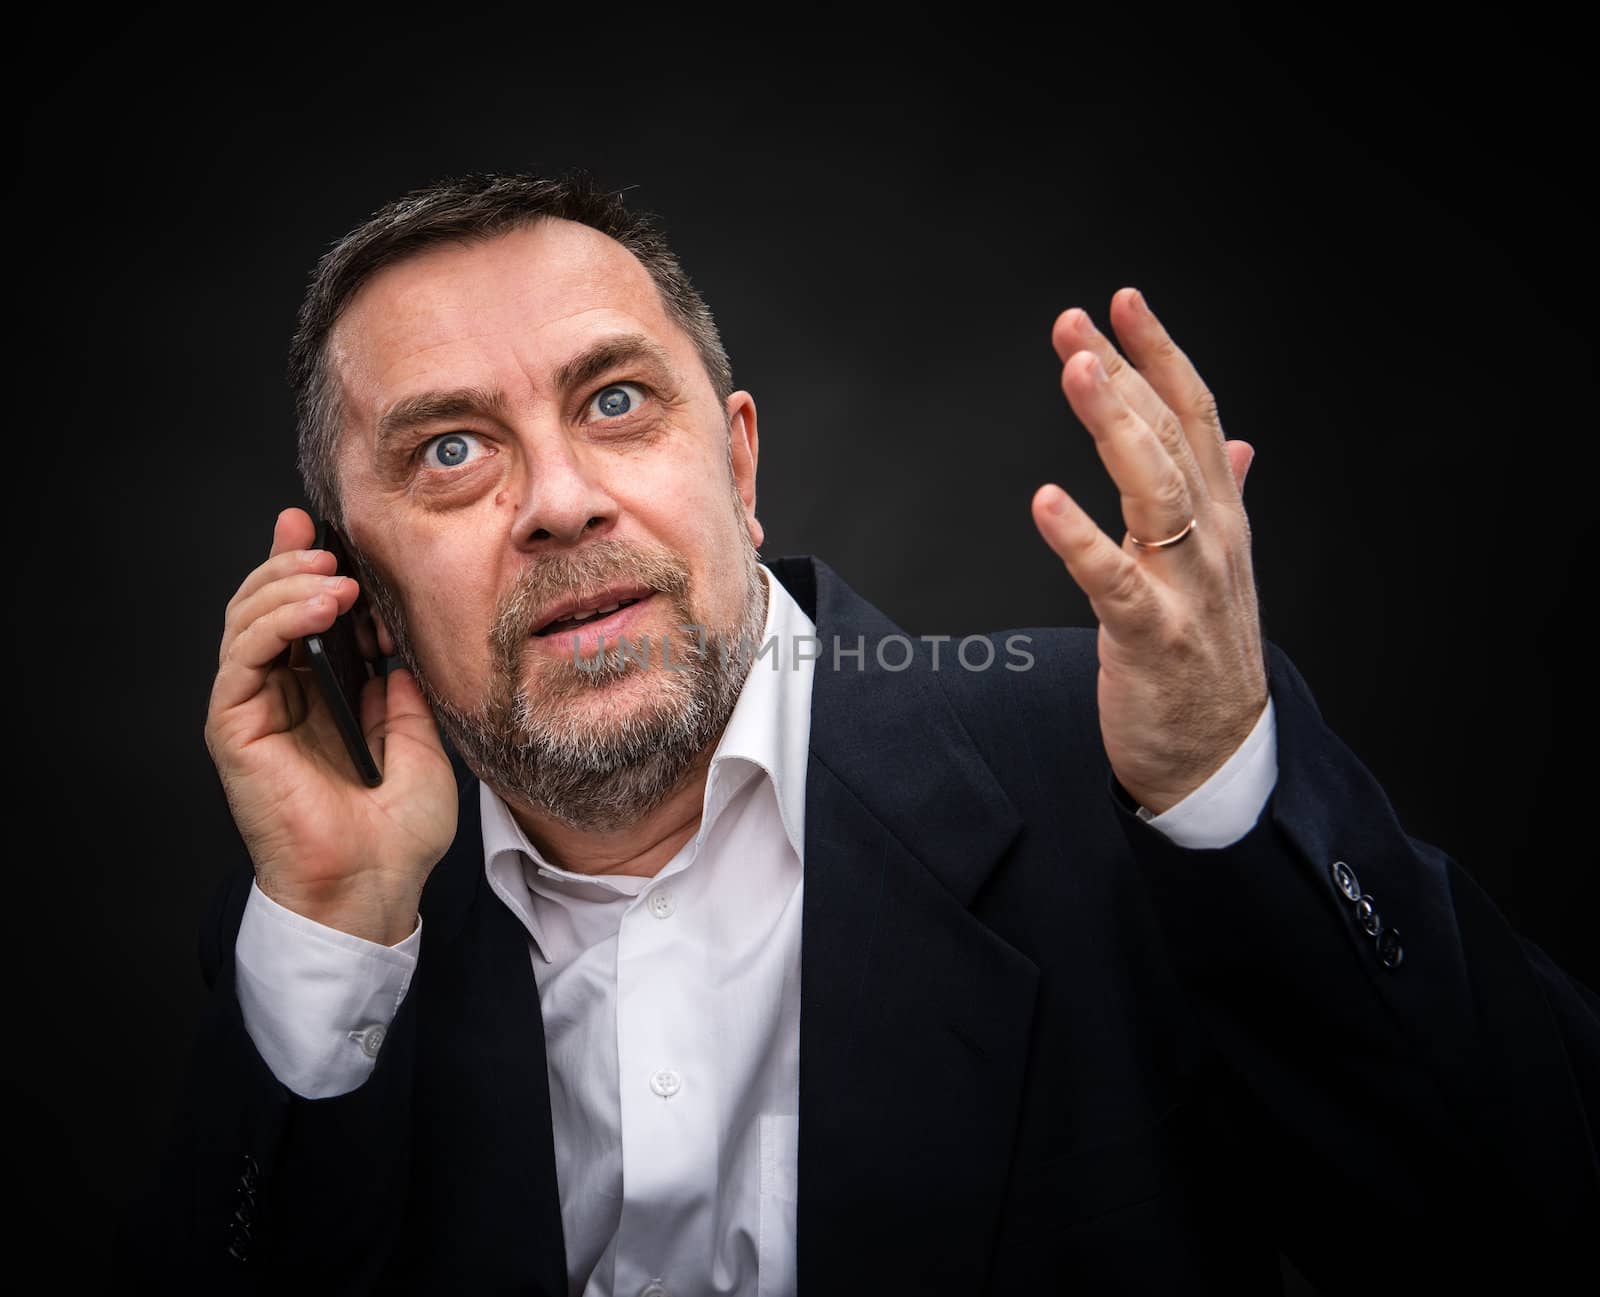  businessman speaks on a mobile phone by palinchak